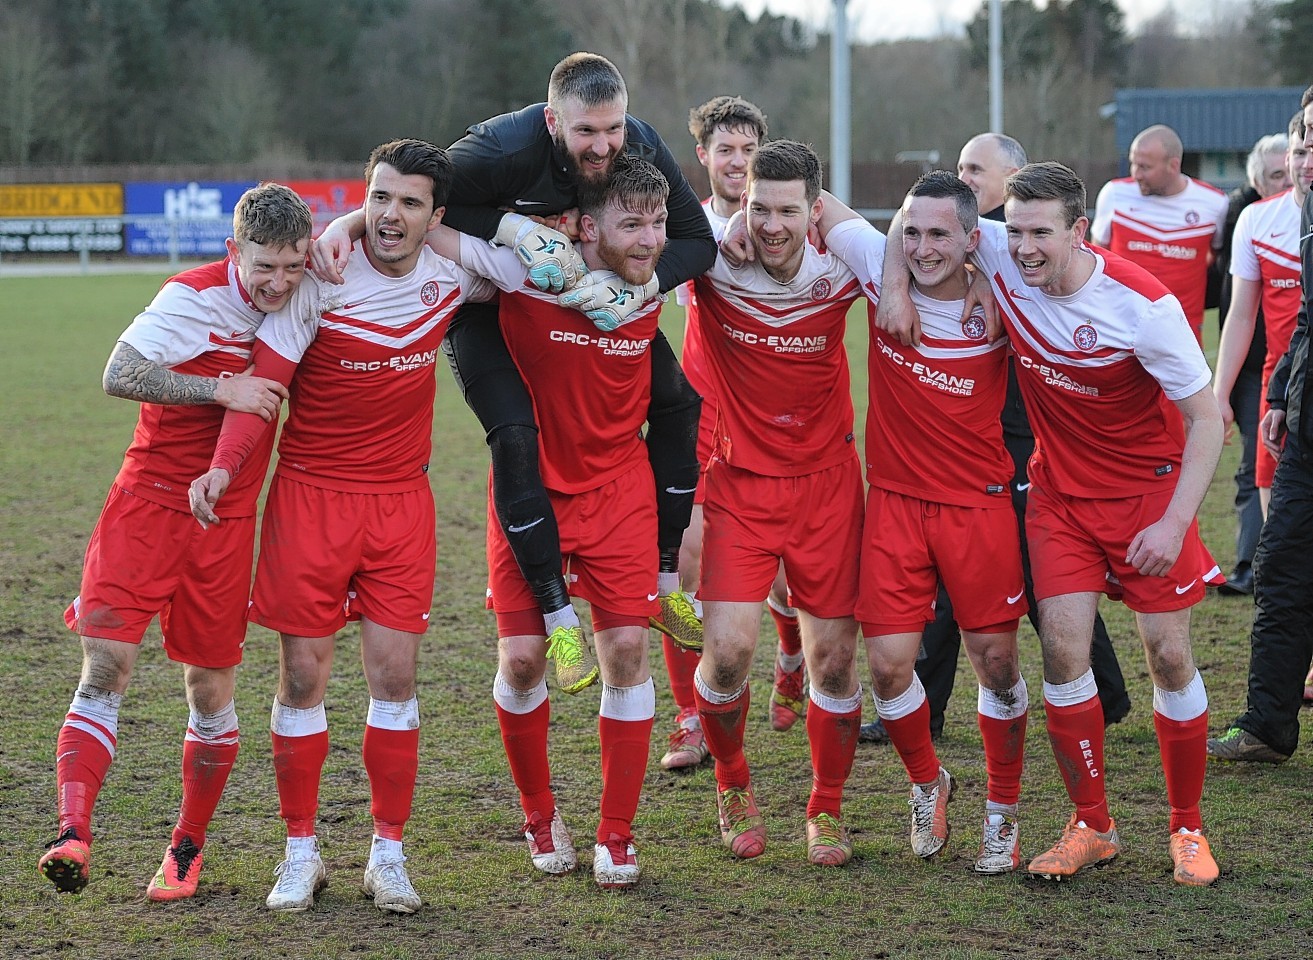 Brora celebrate winning the Highland League title